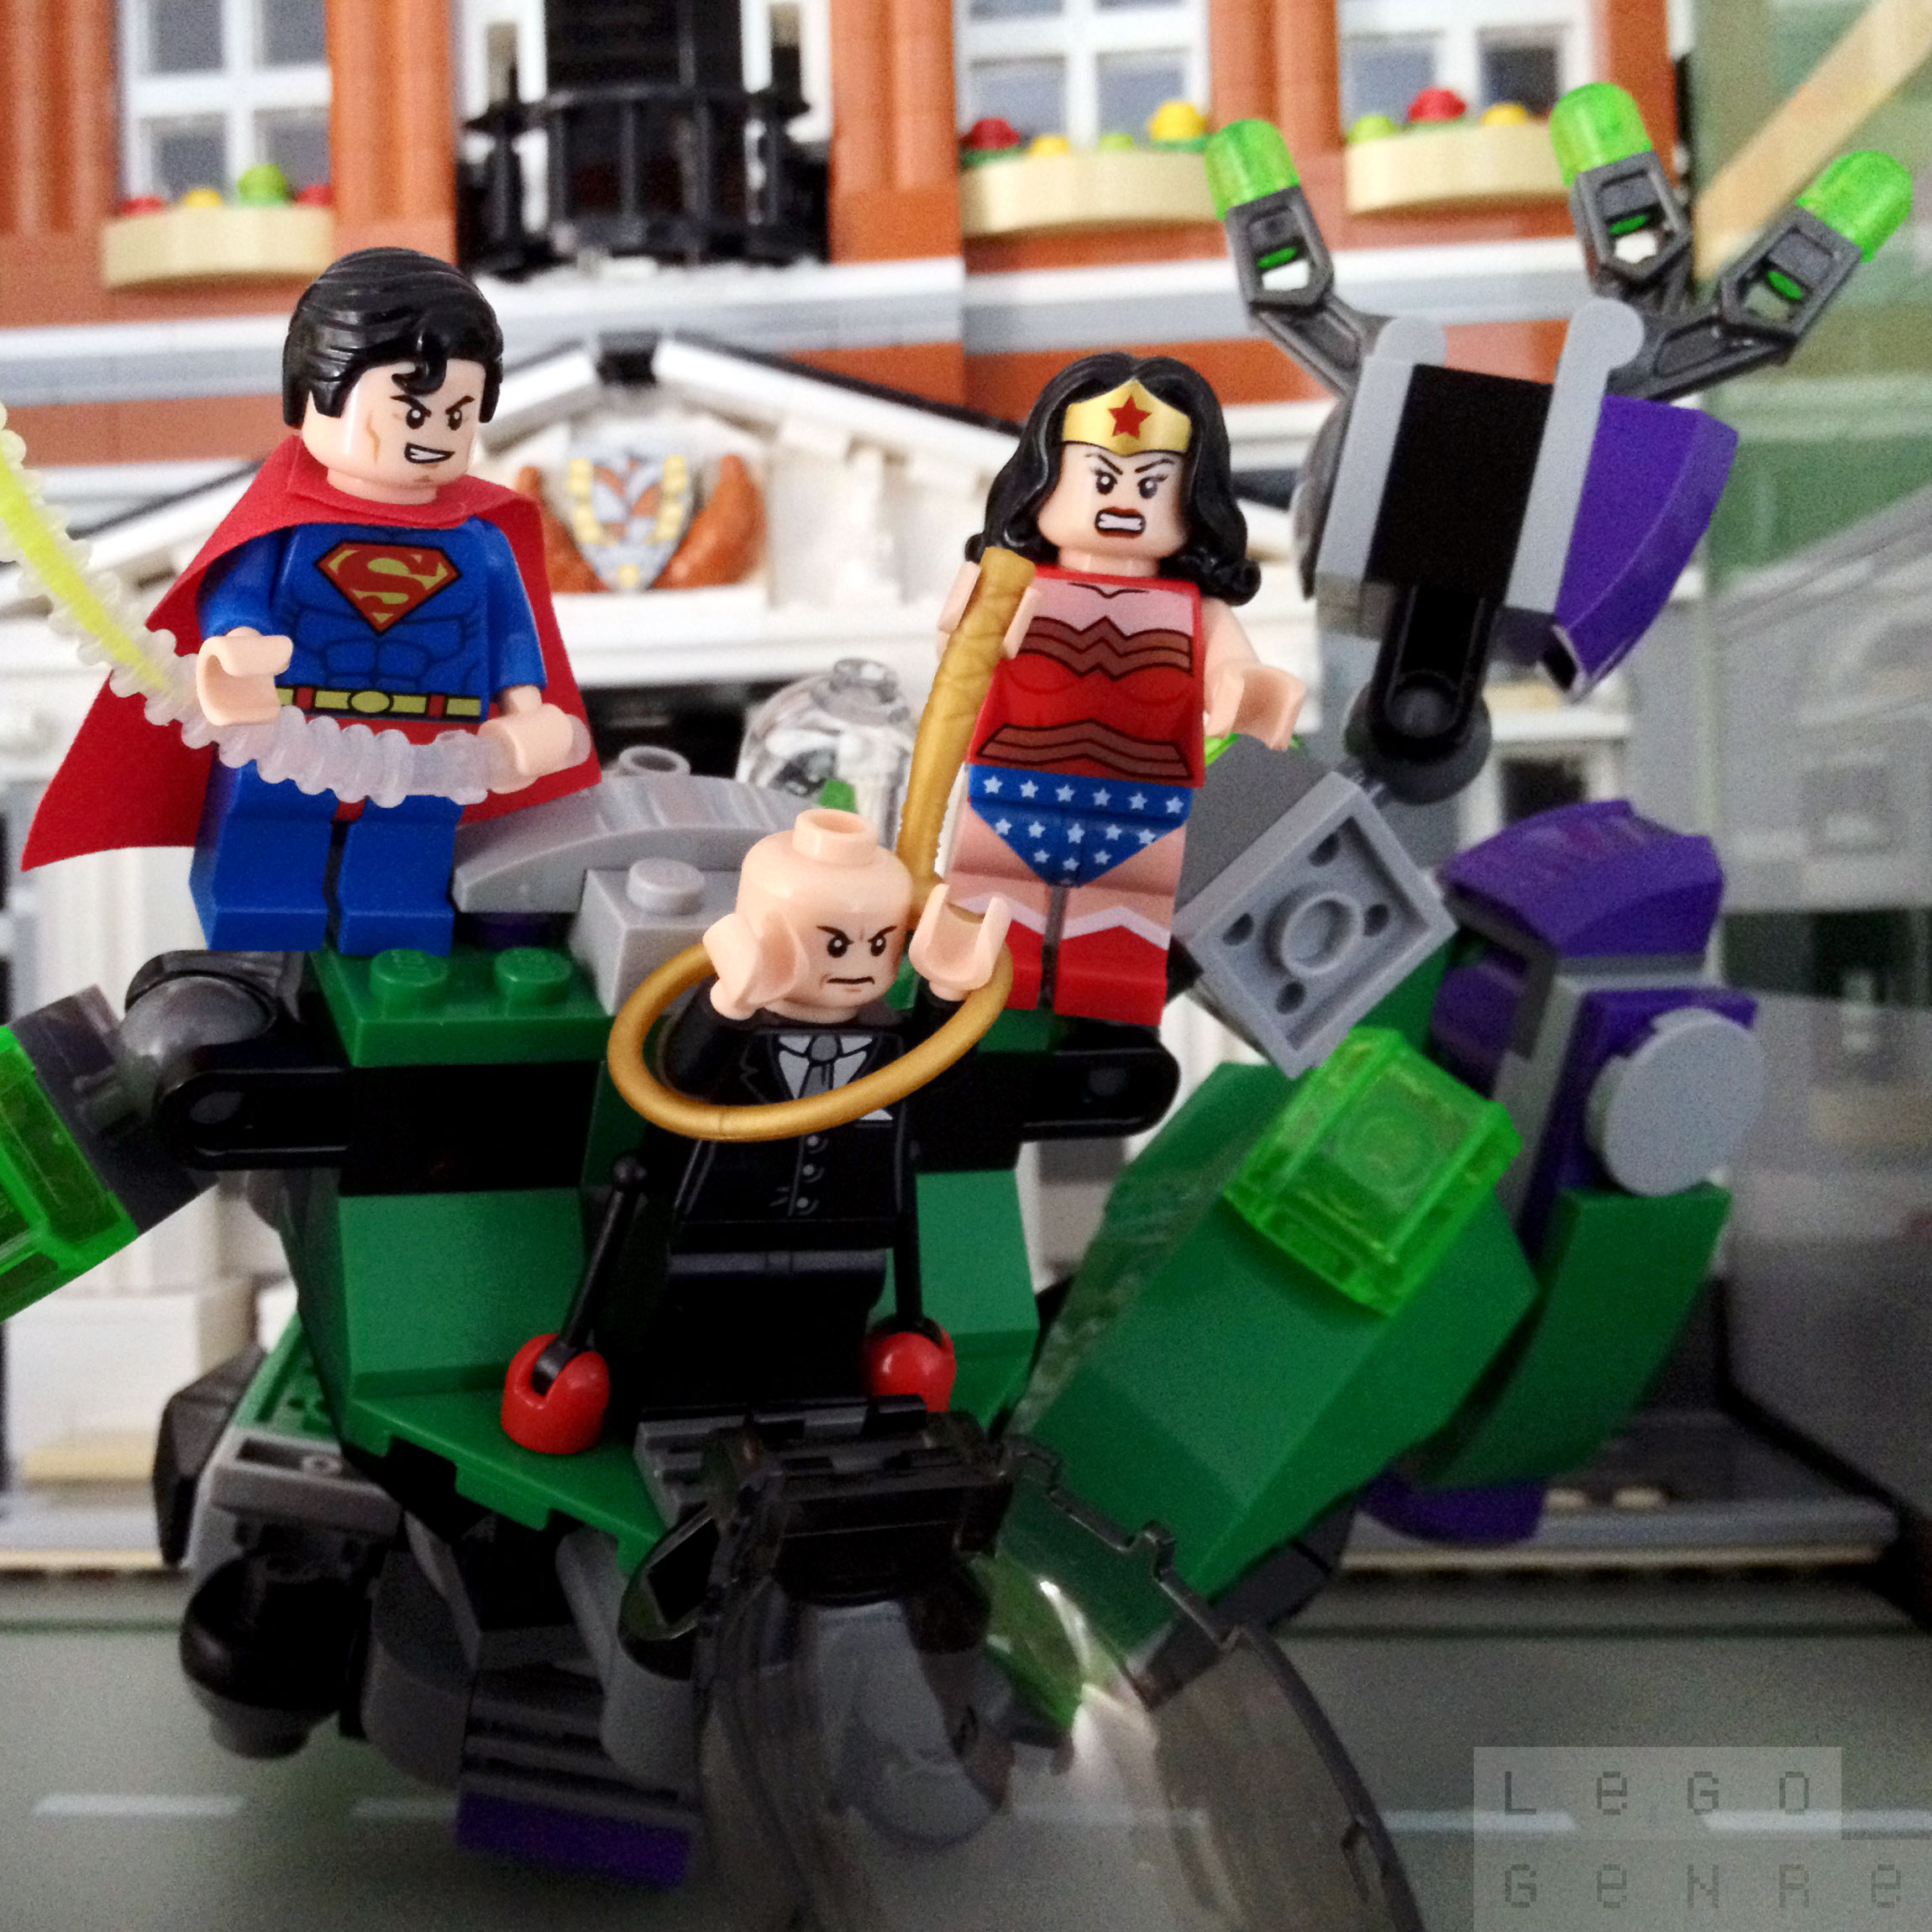 LegoGenre 00291: Lex Luthor Foiled Again